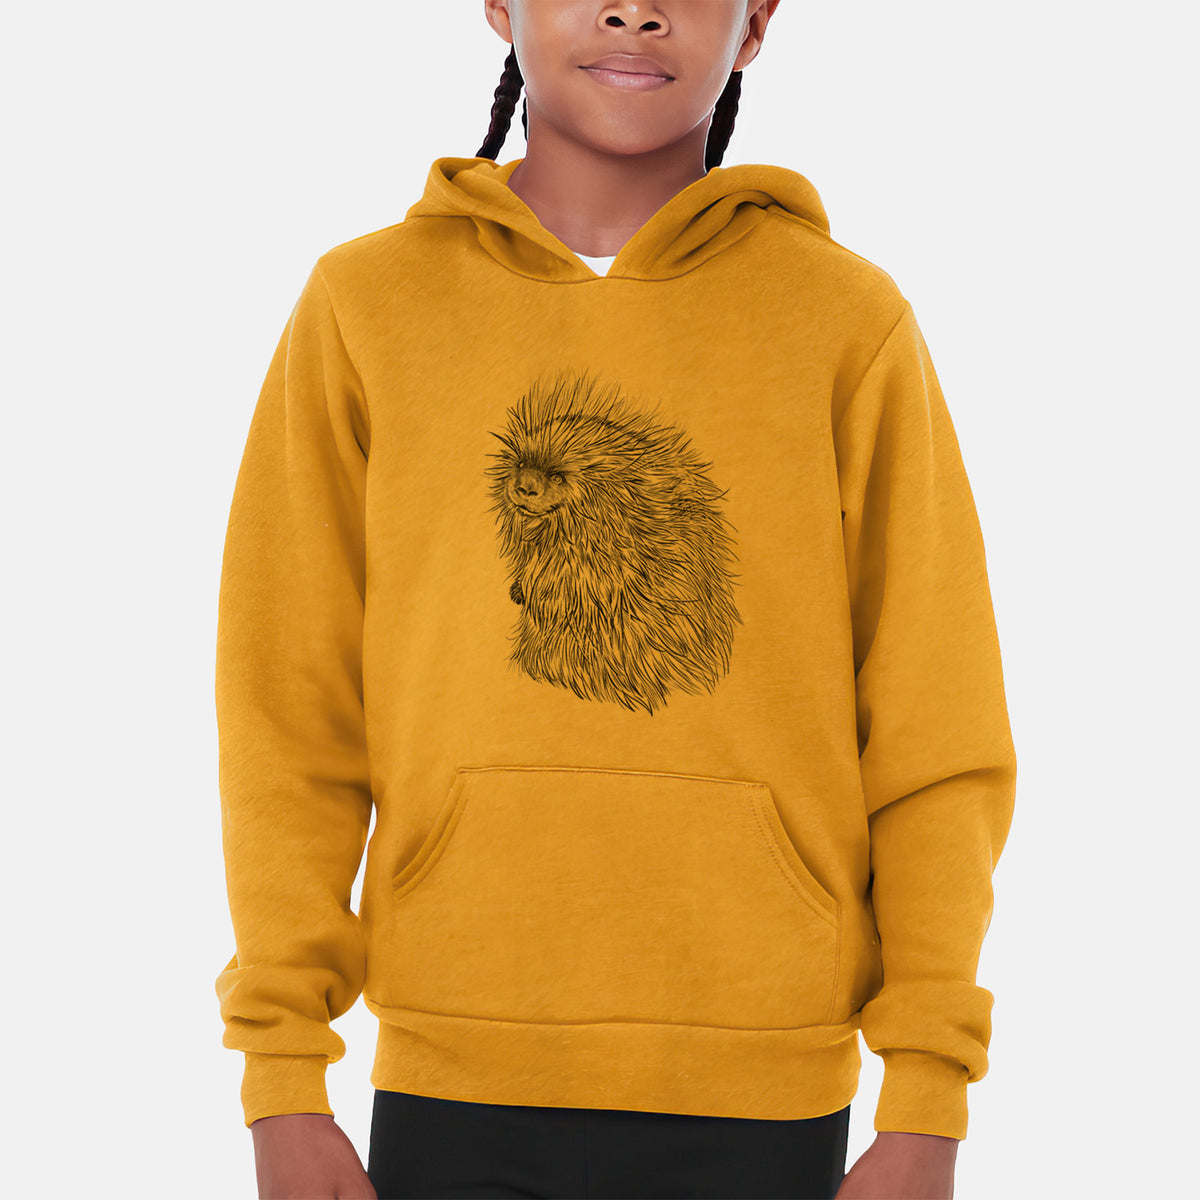 North American Porcupine - Erethizon dorsatum - Youth Hoodie Sweatshirt